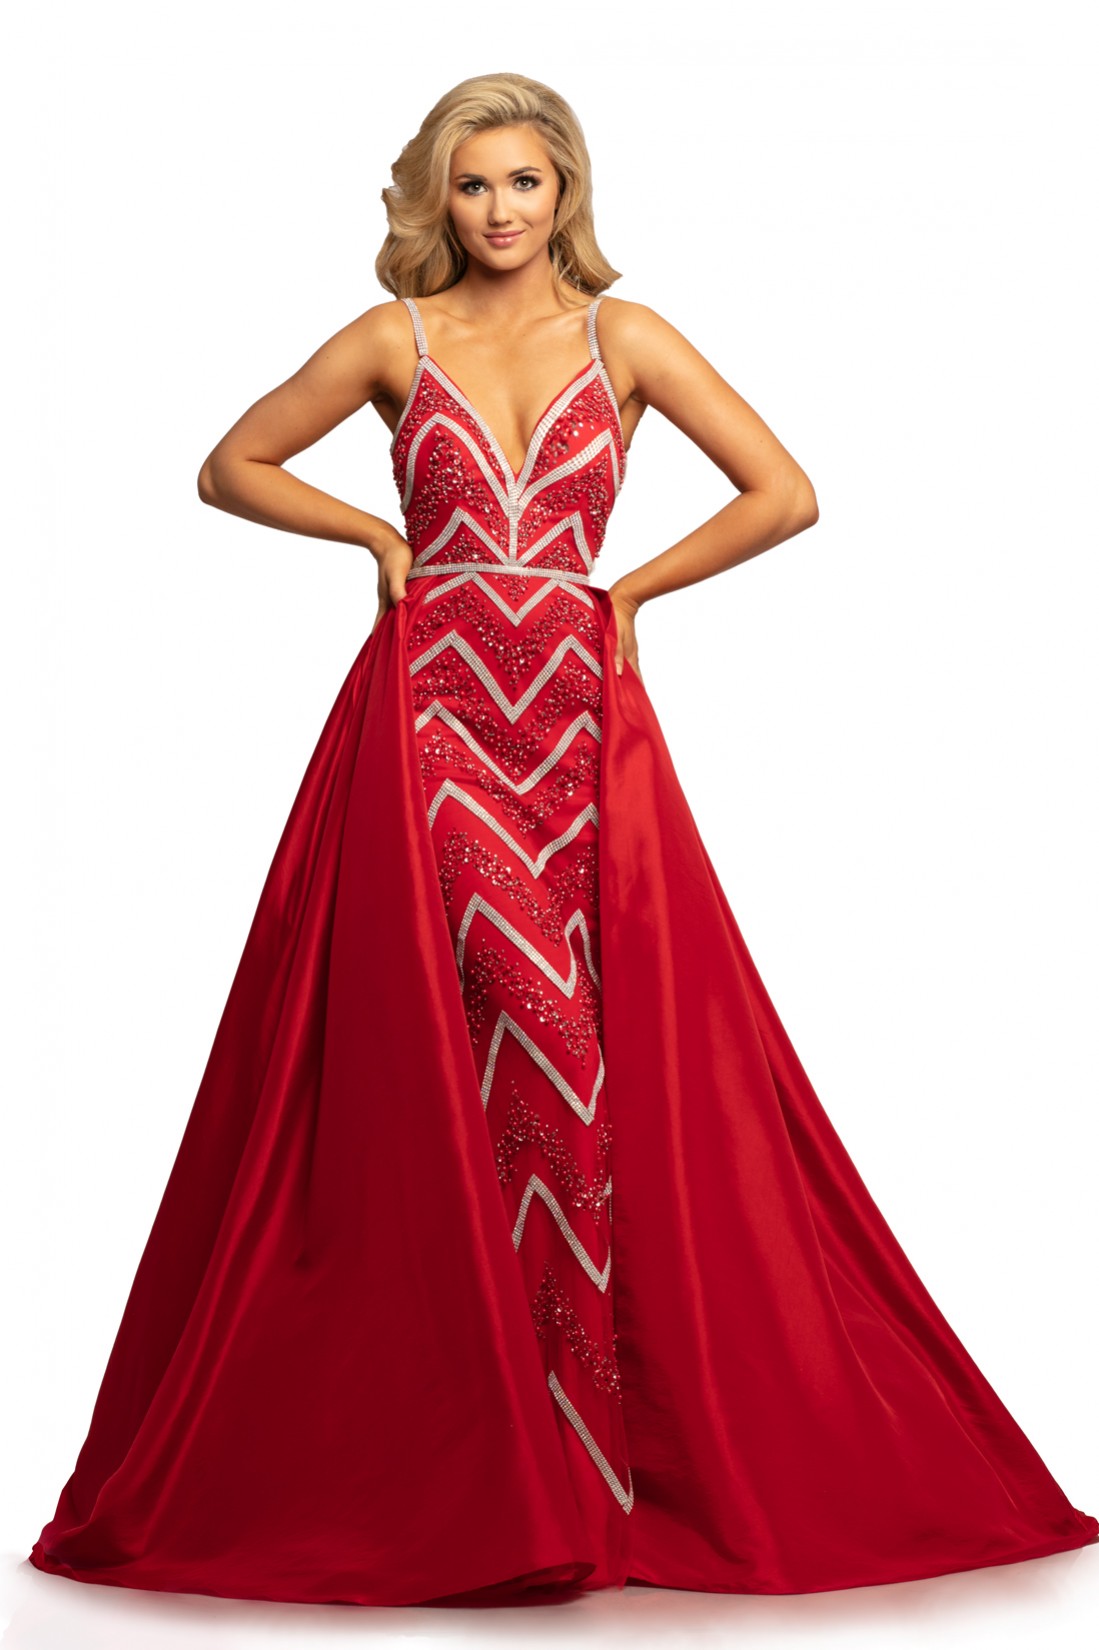 Johnathan Kayne Red and Silver Dress